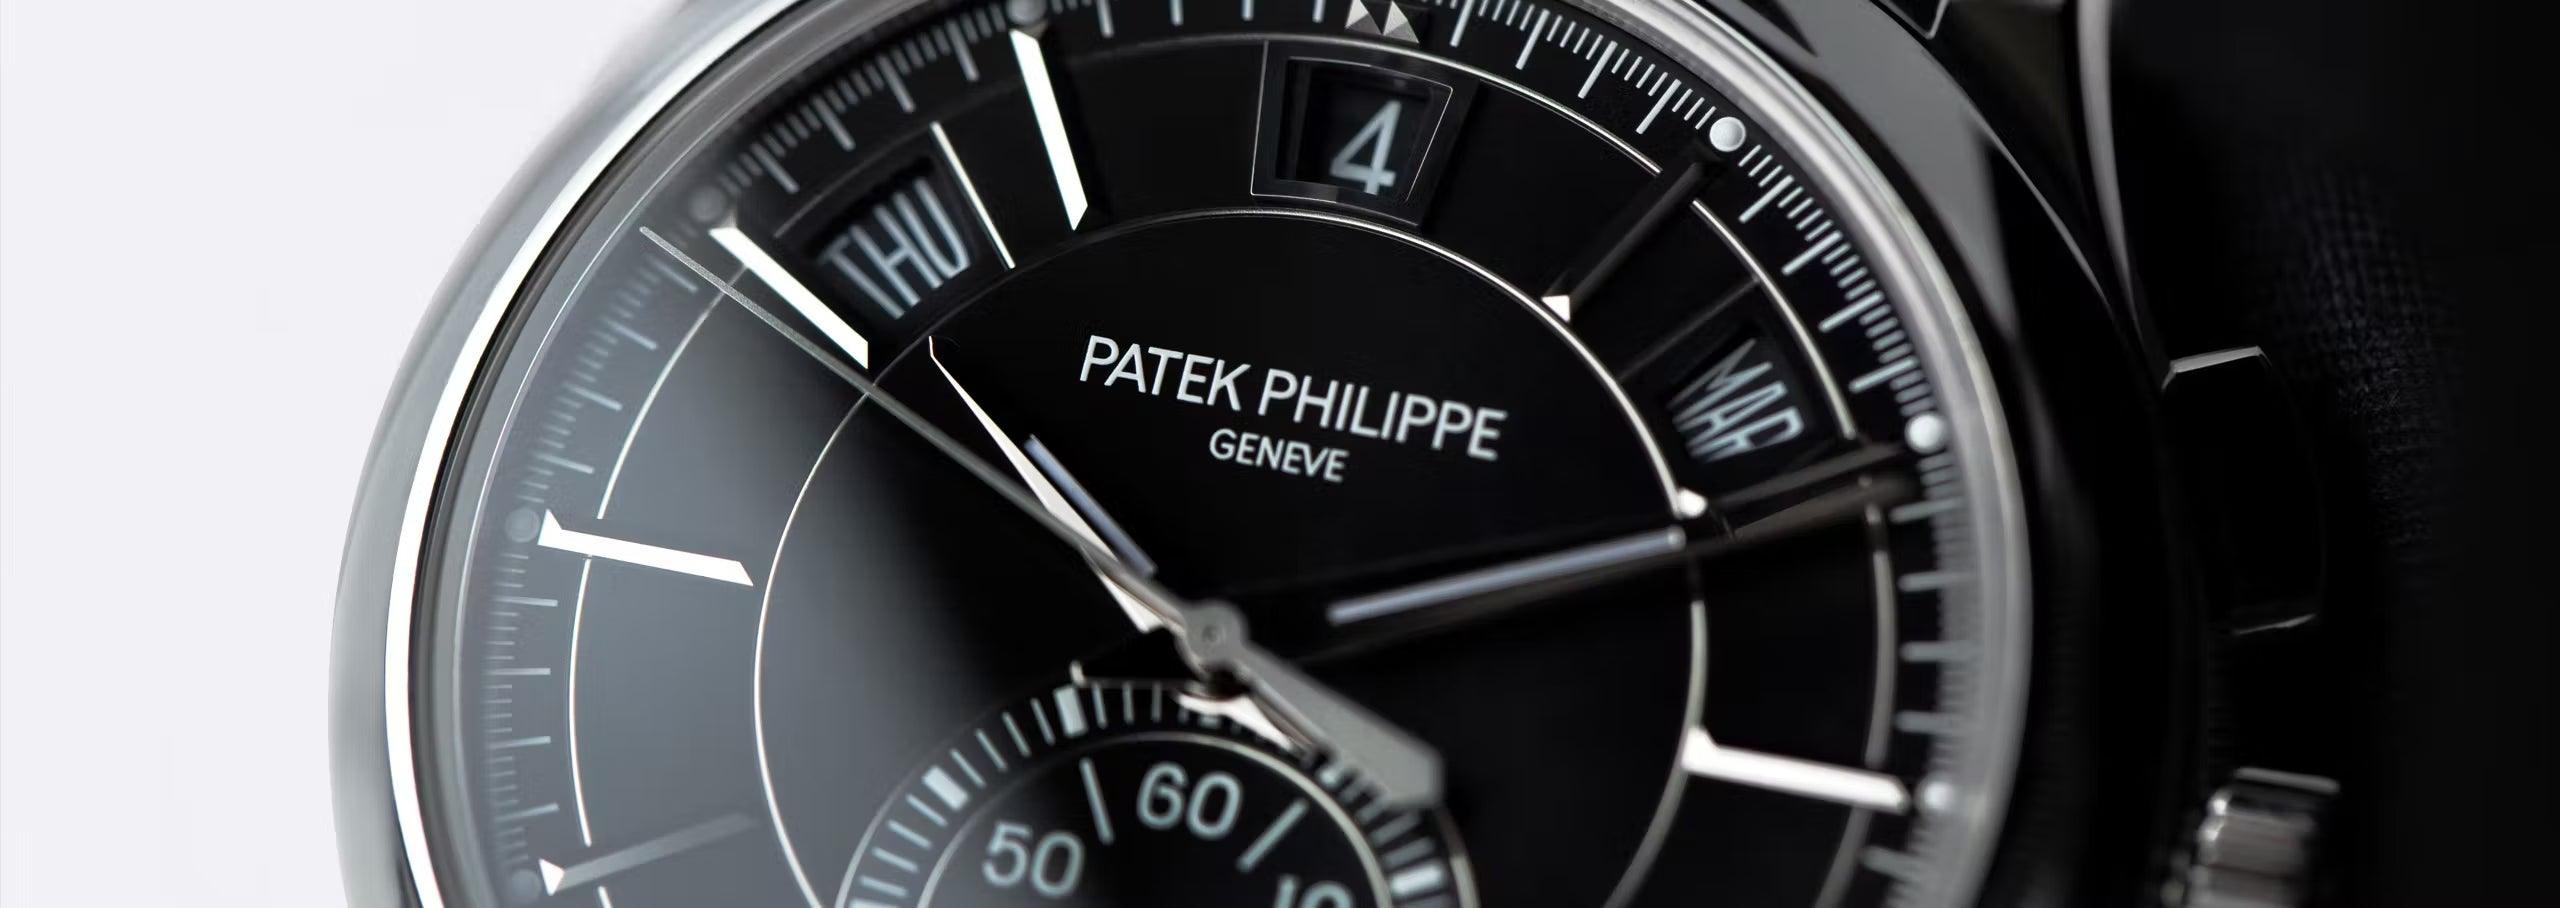 Patek Philippe - G&G Timepieces